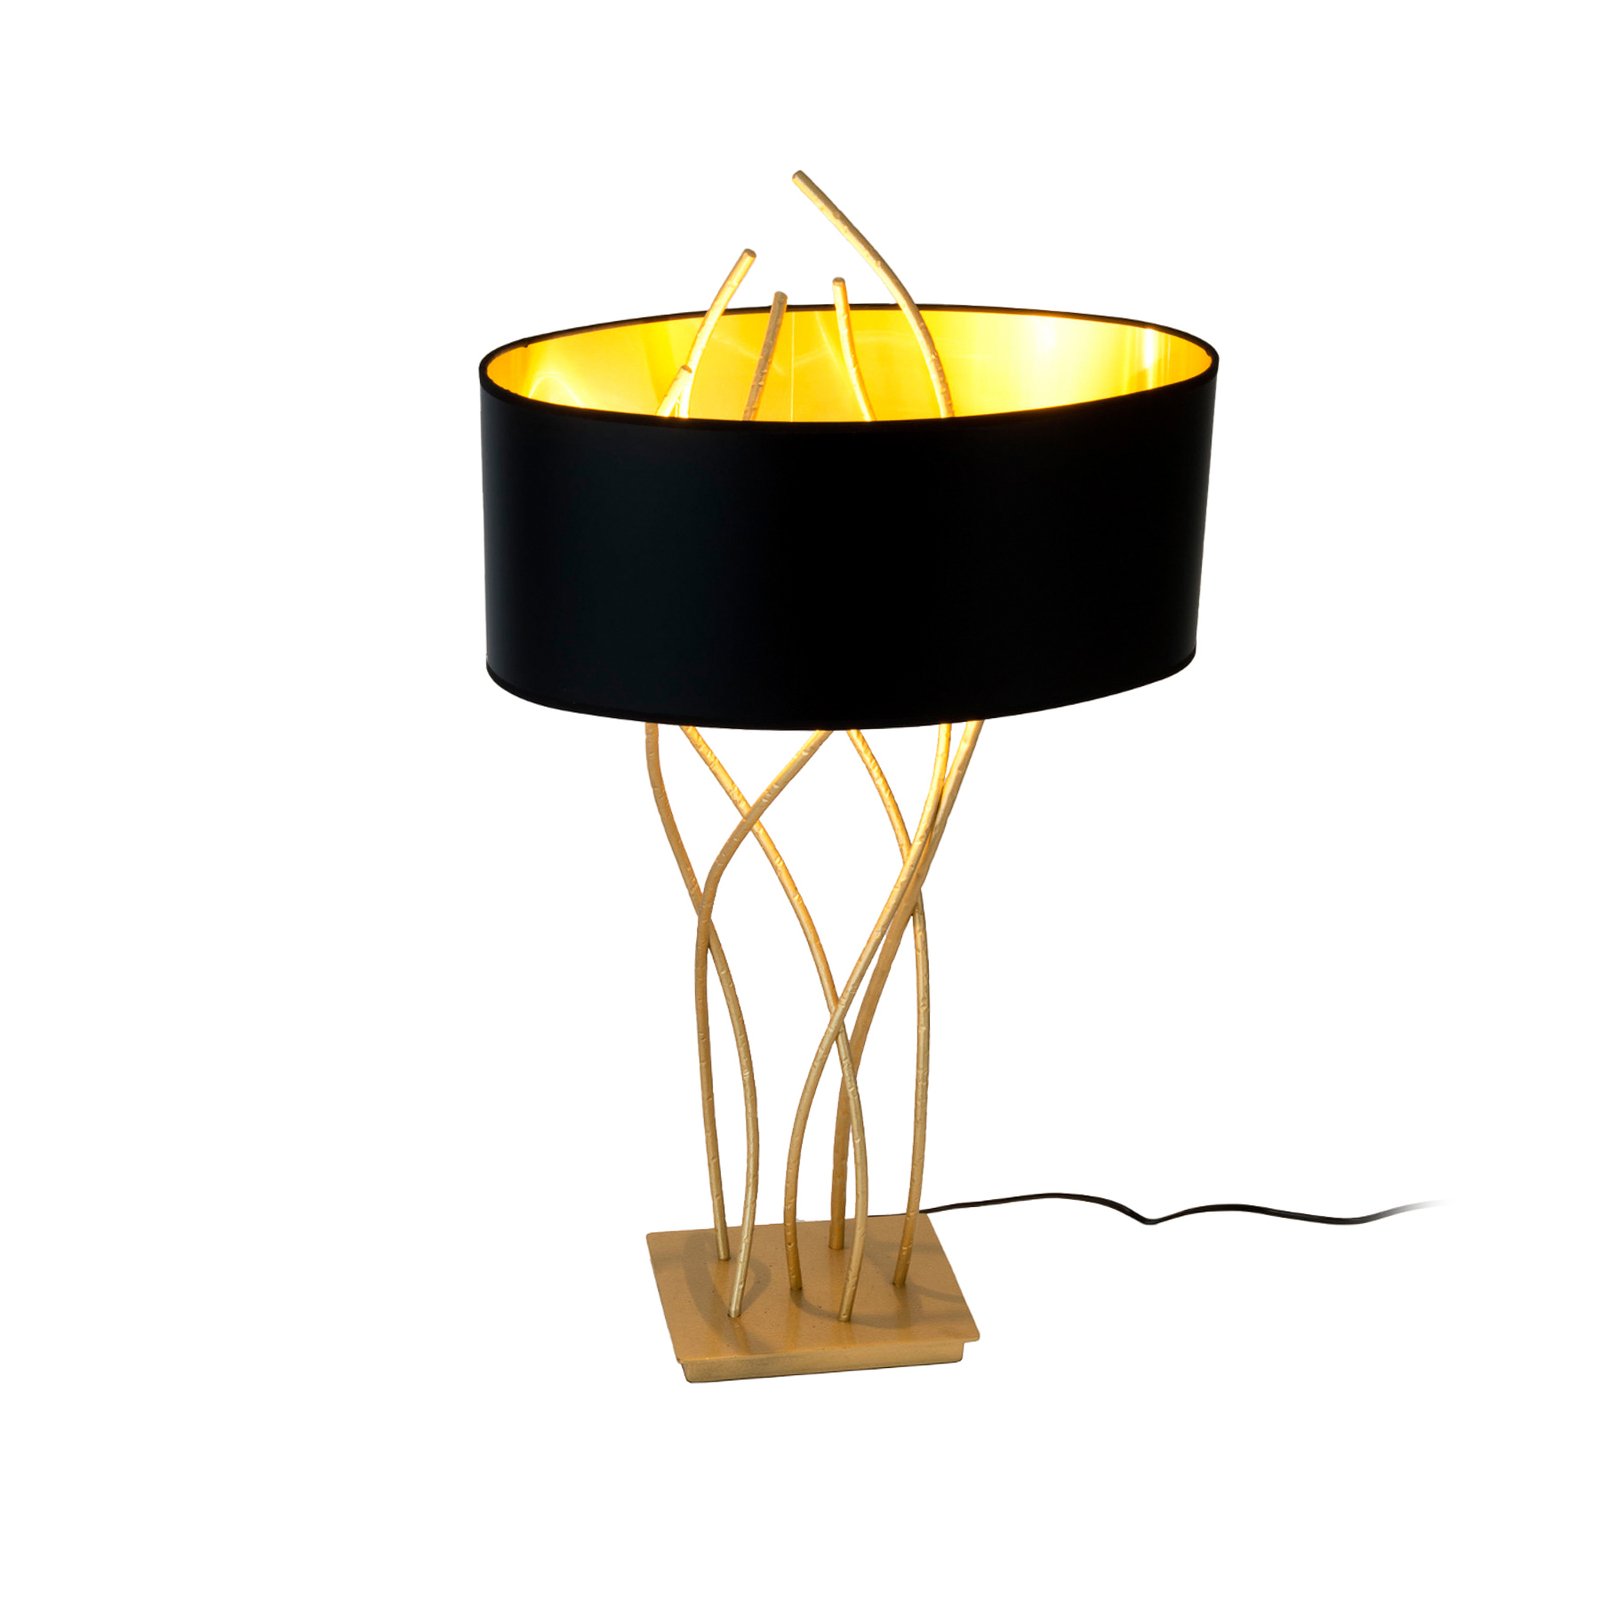 Elba ovale tafellamp, goud/zwart, hoogte 75 cm, ijzer